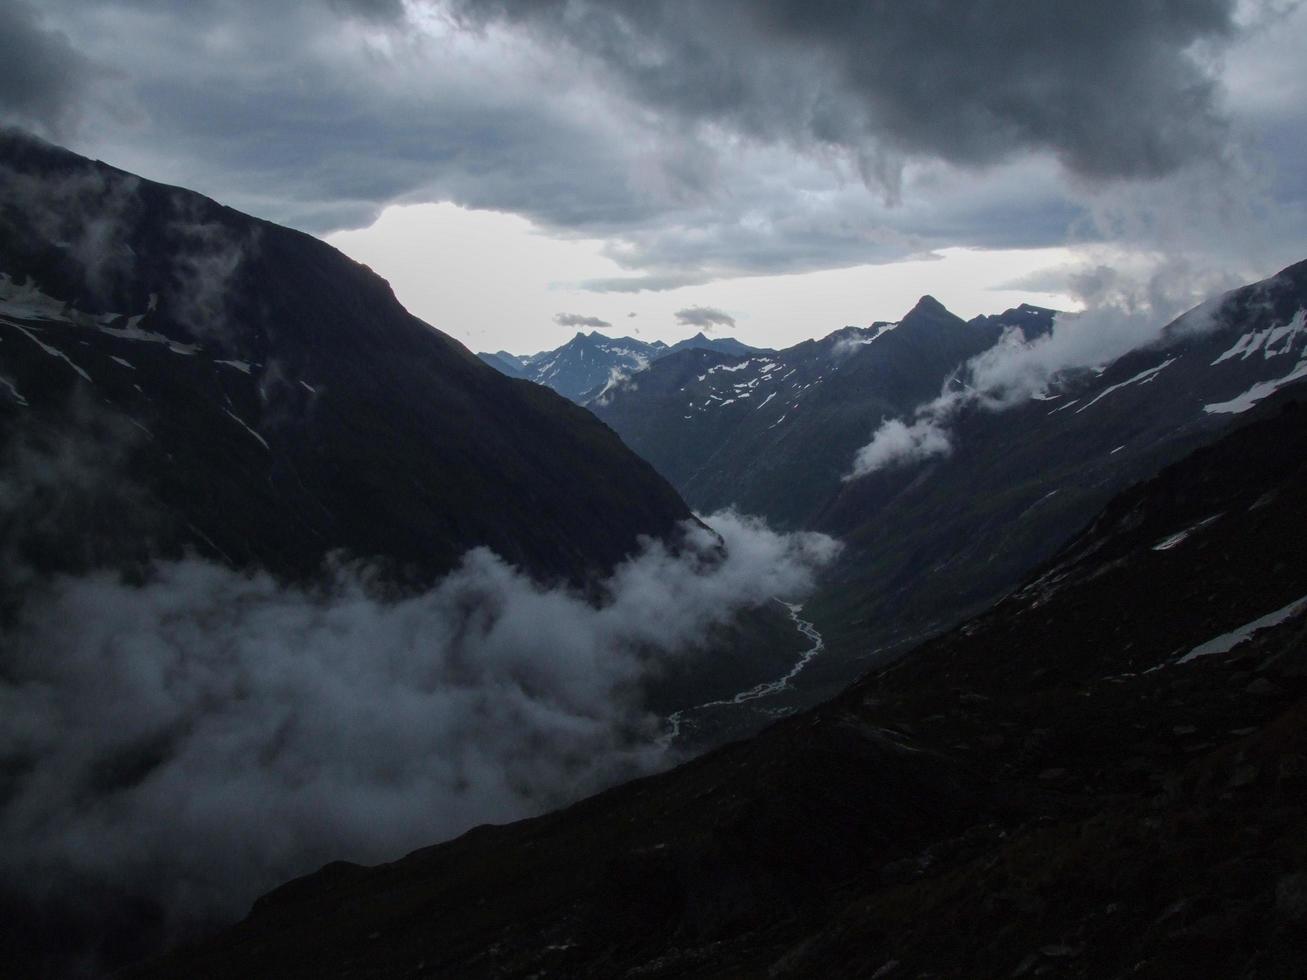 temporale in movimento in umbale valle, hohe tauro nazionale parco, Austria foto